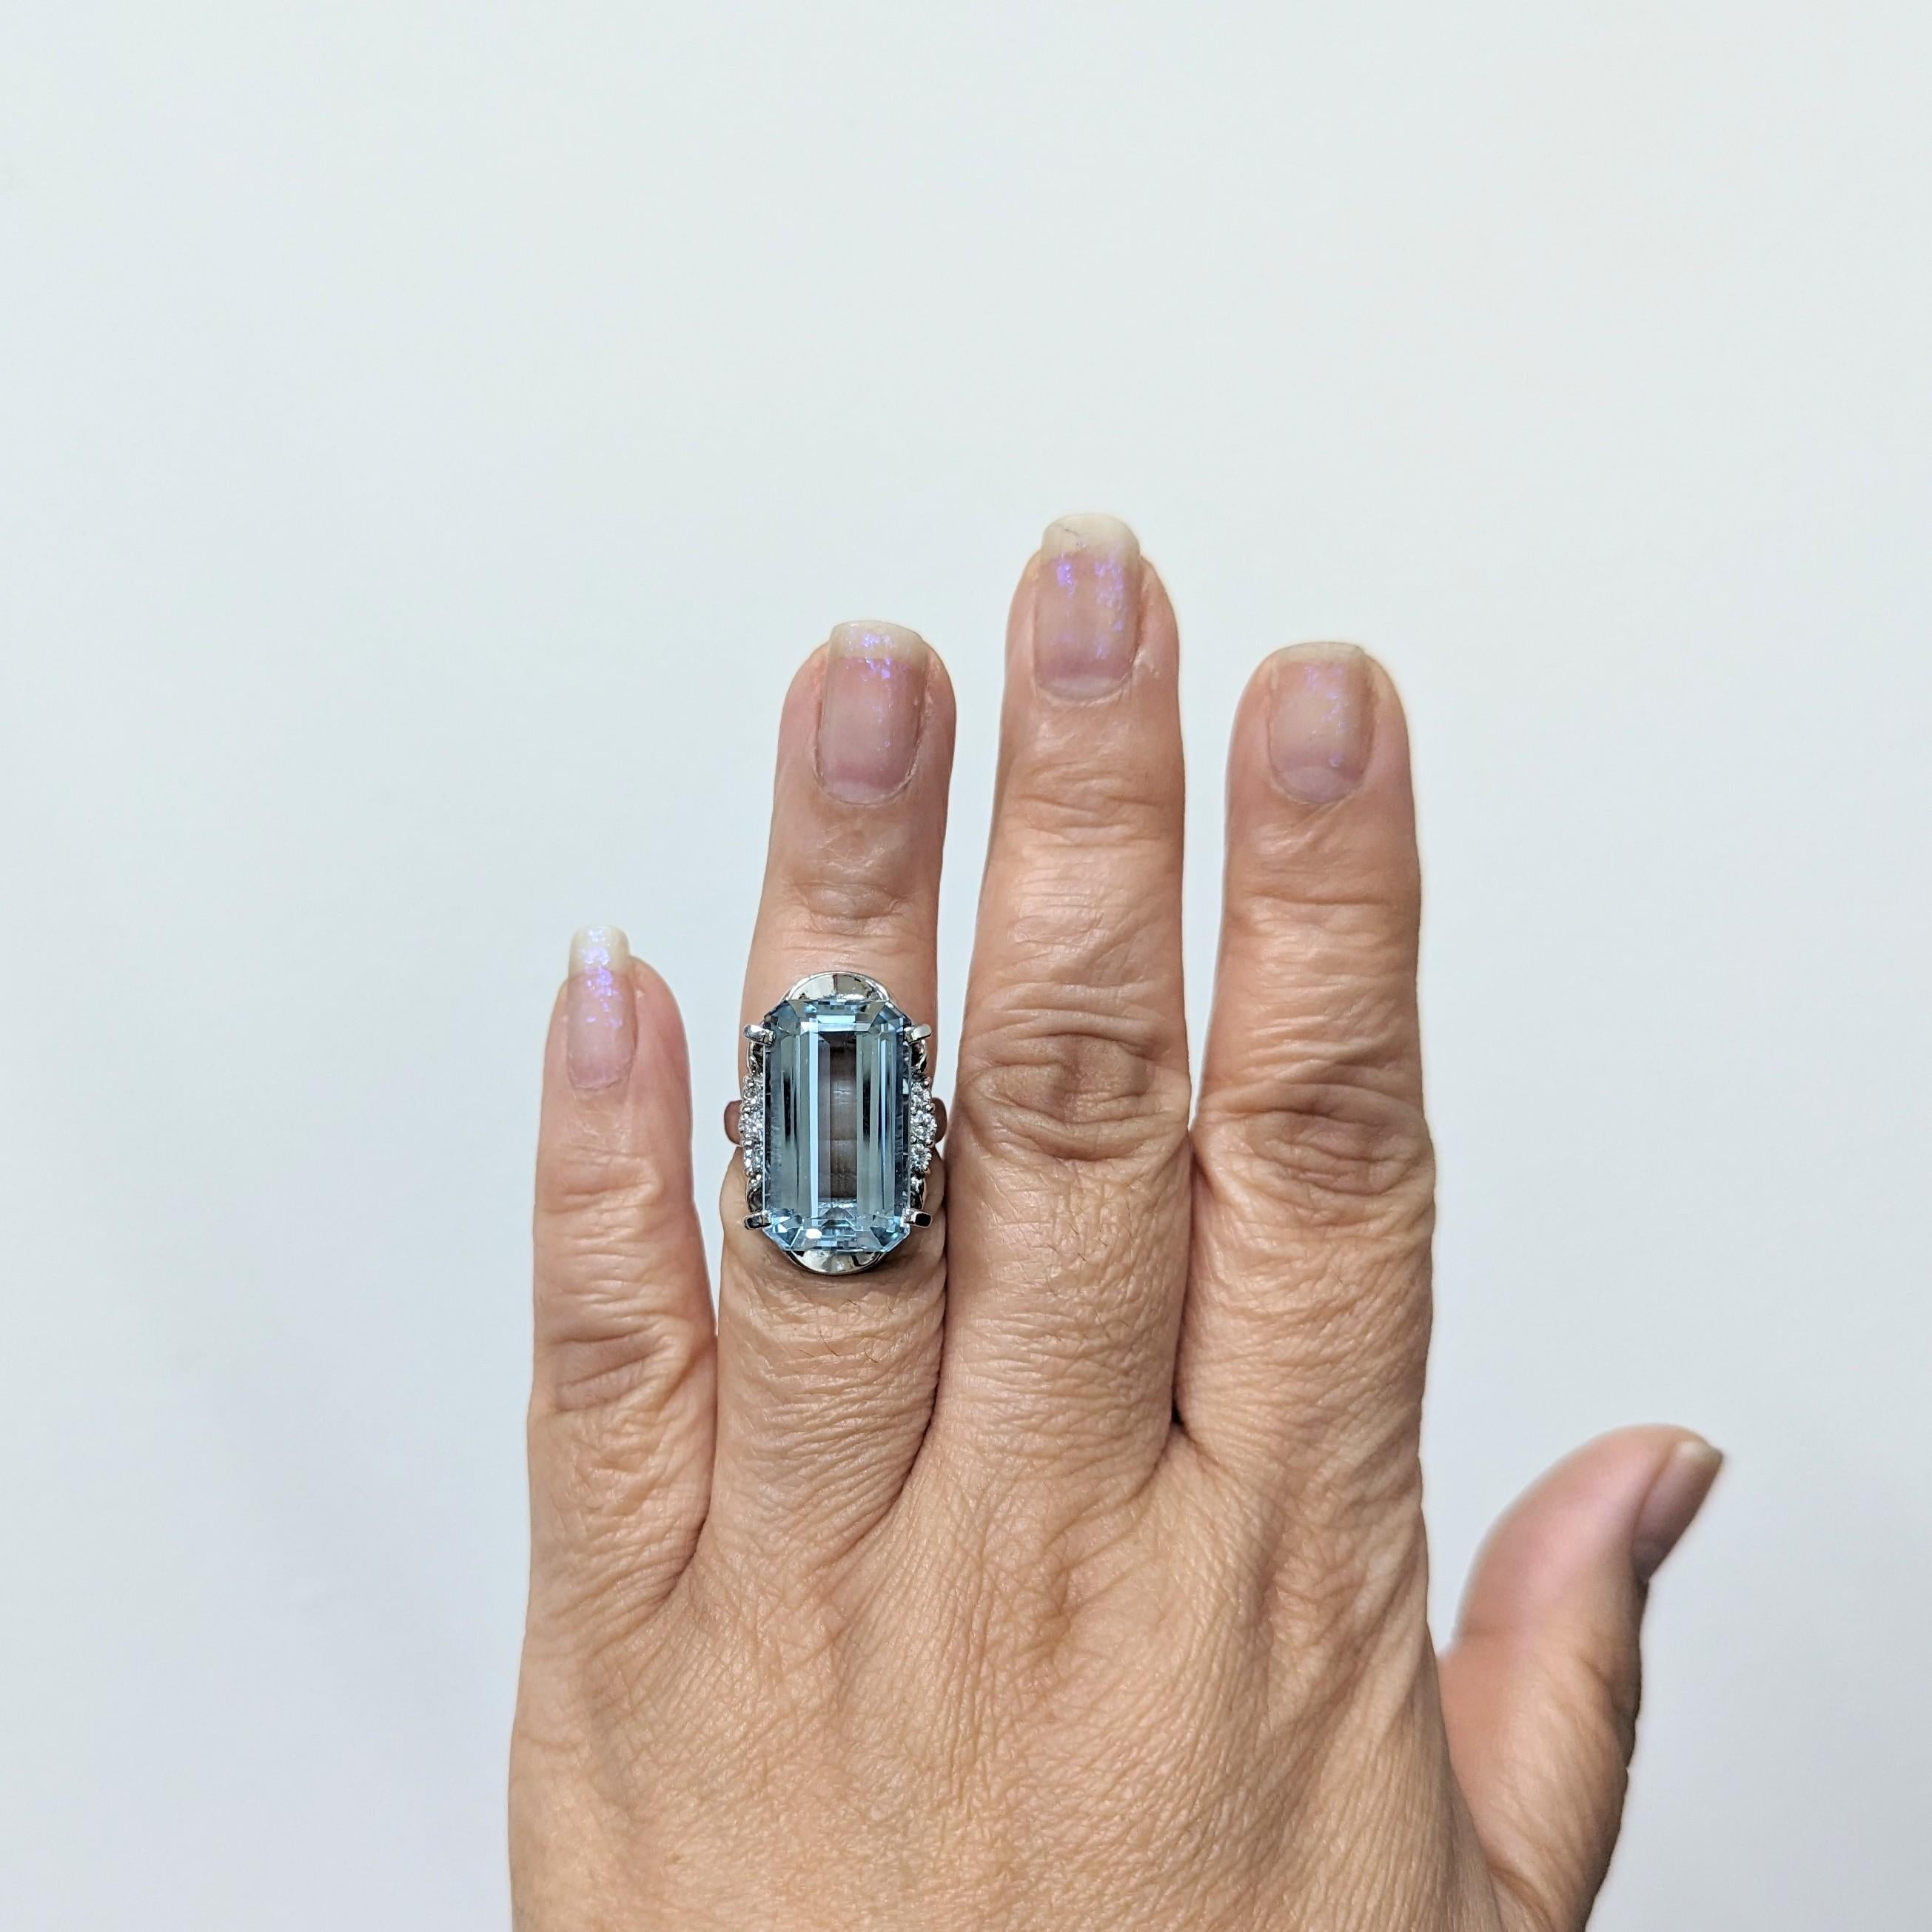 Gorgeous 14.83 ct. aquamarine emerald cut with 0.28 ct. white diamond rounds.  Handmade in platinum.  Ring size 6.